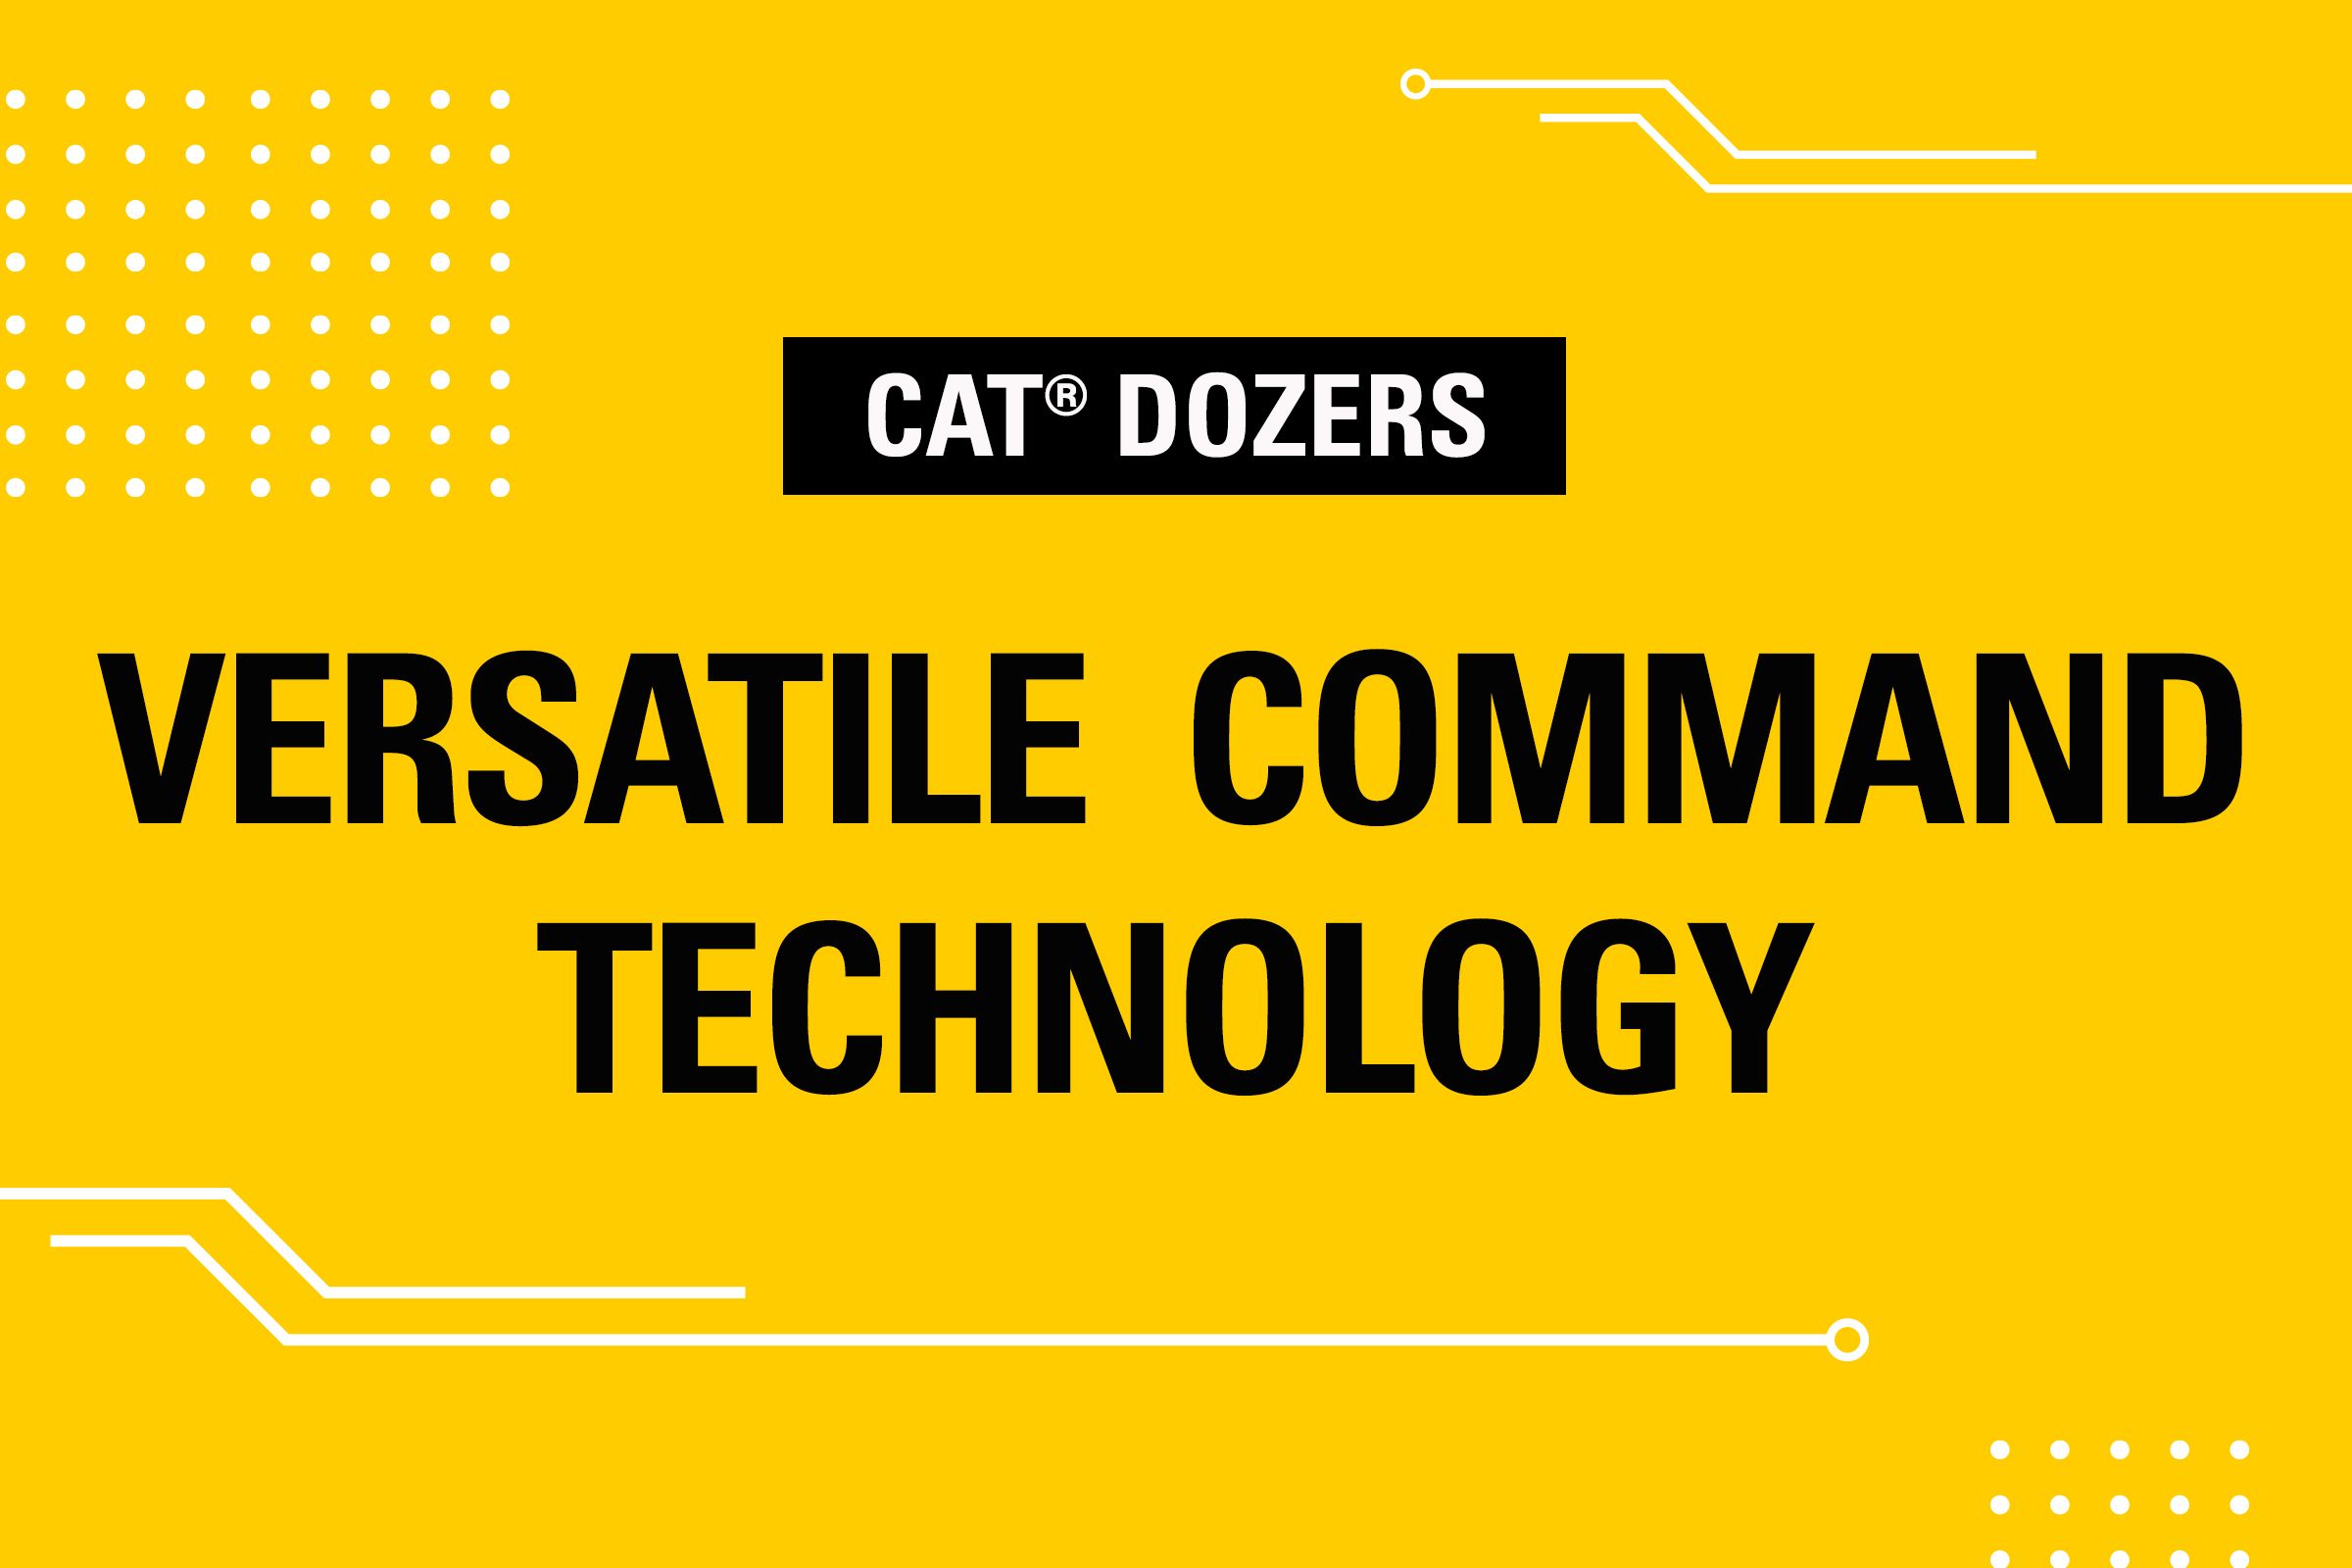 Versatile Command Technology